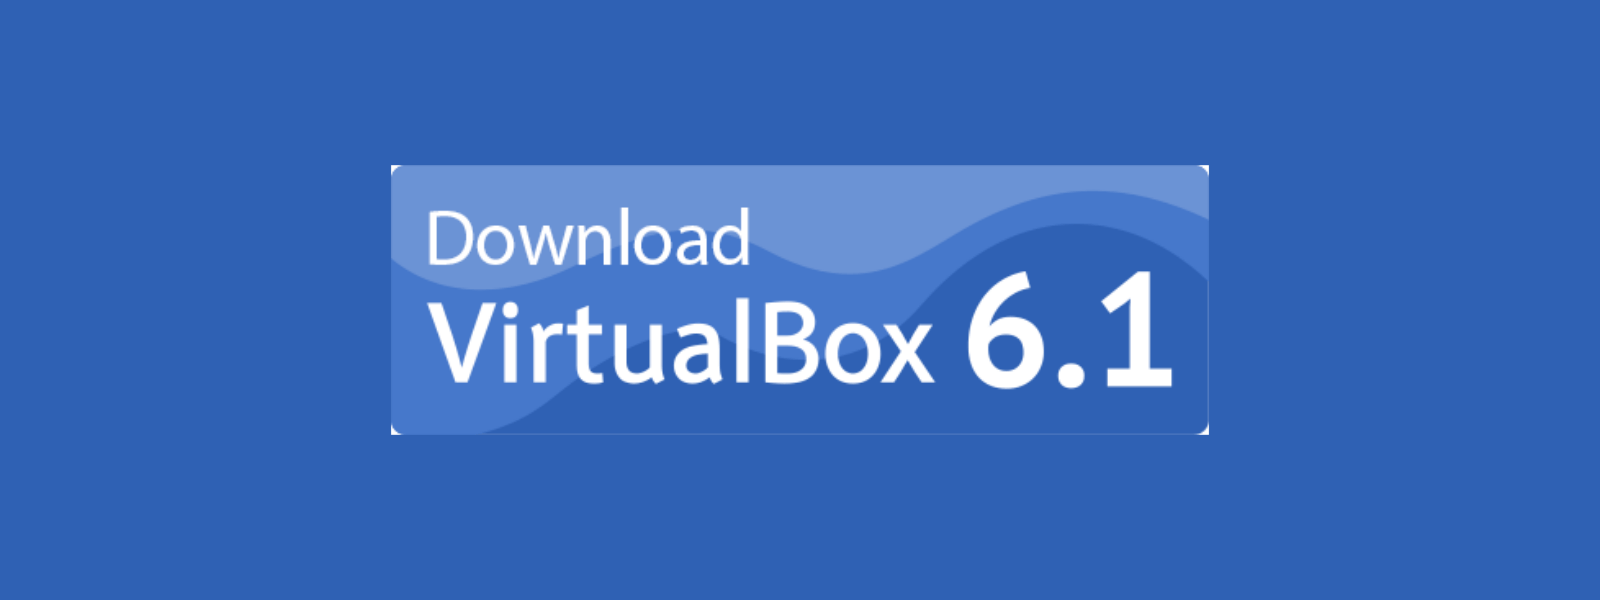 Portada. Download VirtualBox 6.1